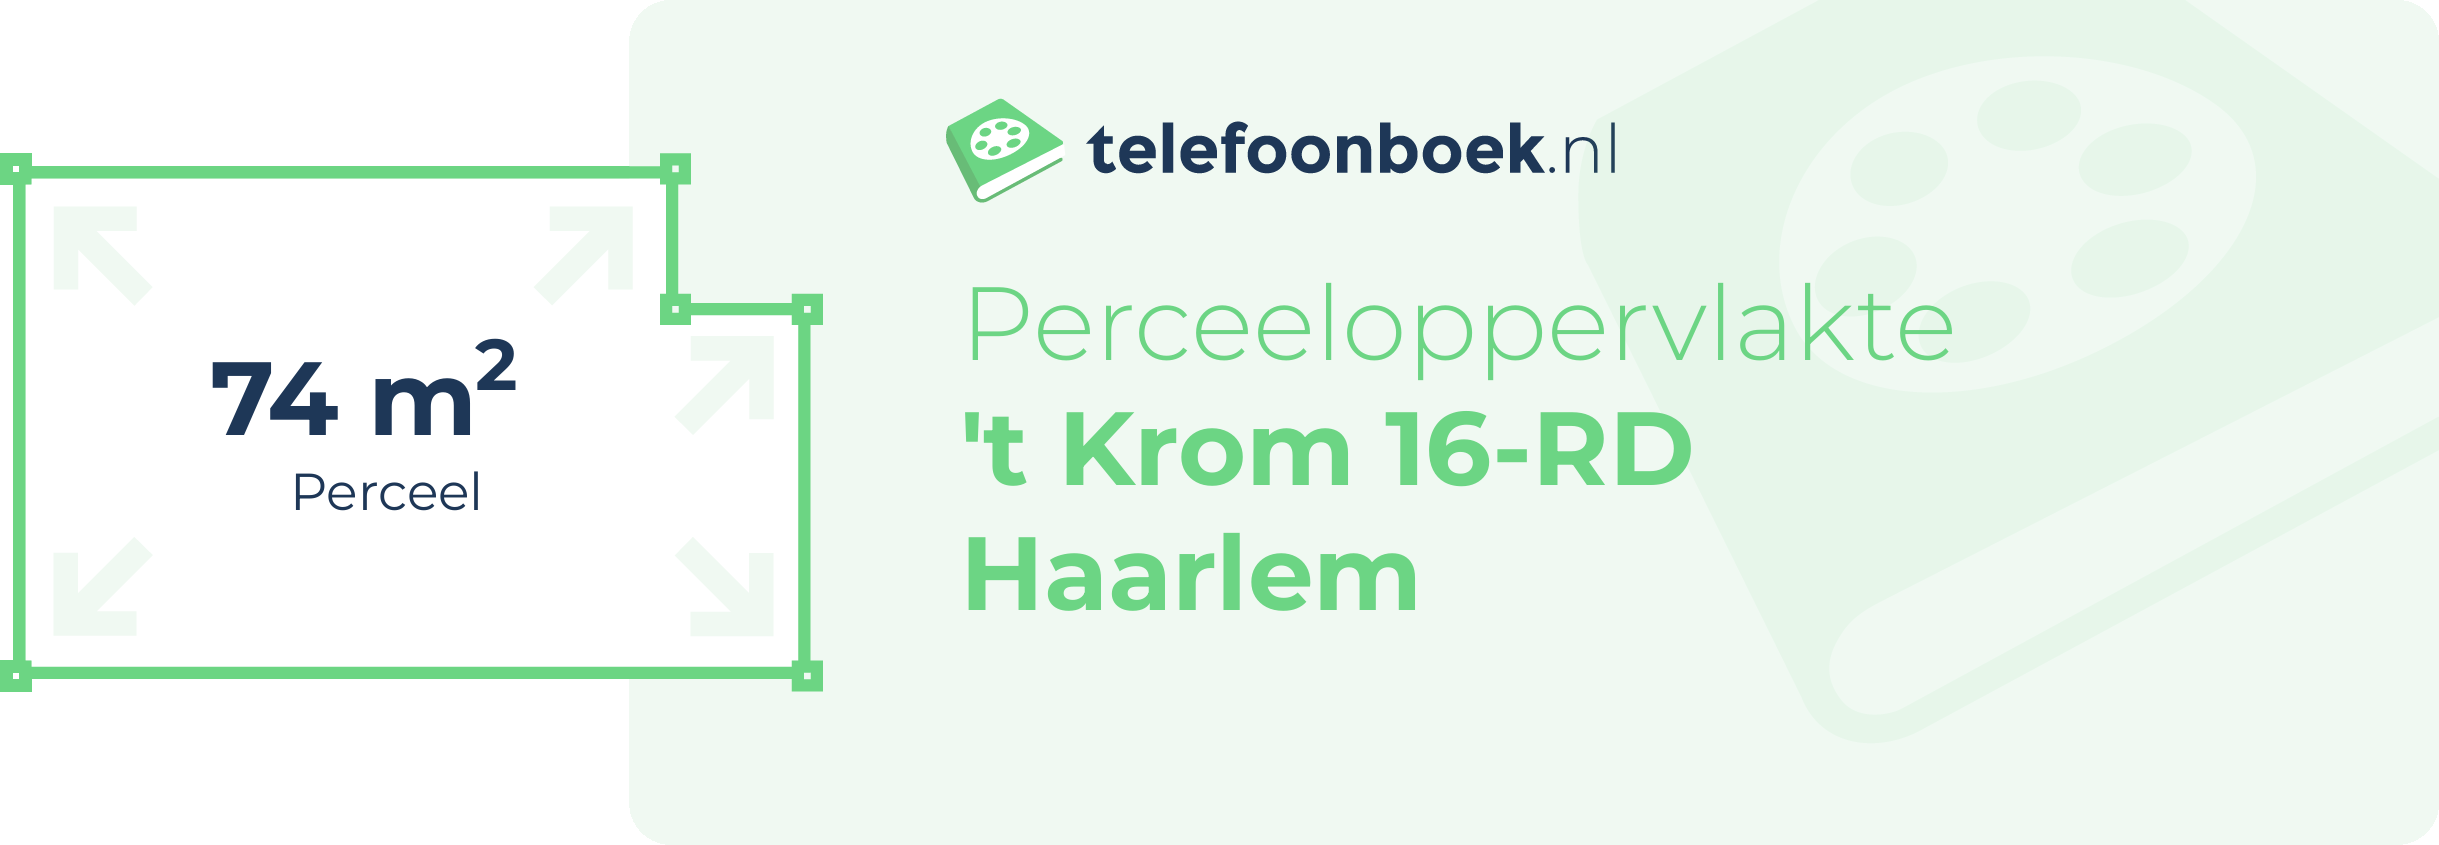 Perceeloppervlakte 't Krom 16-RD Haarlem